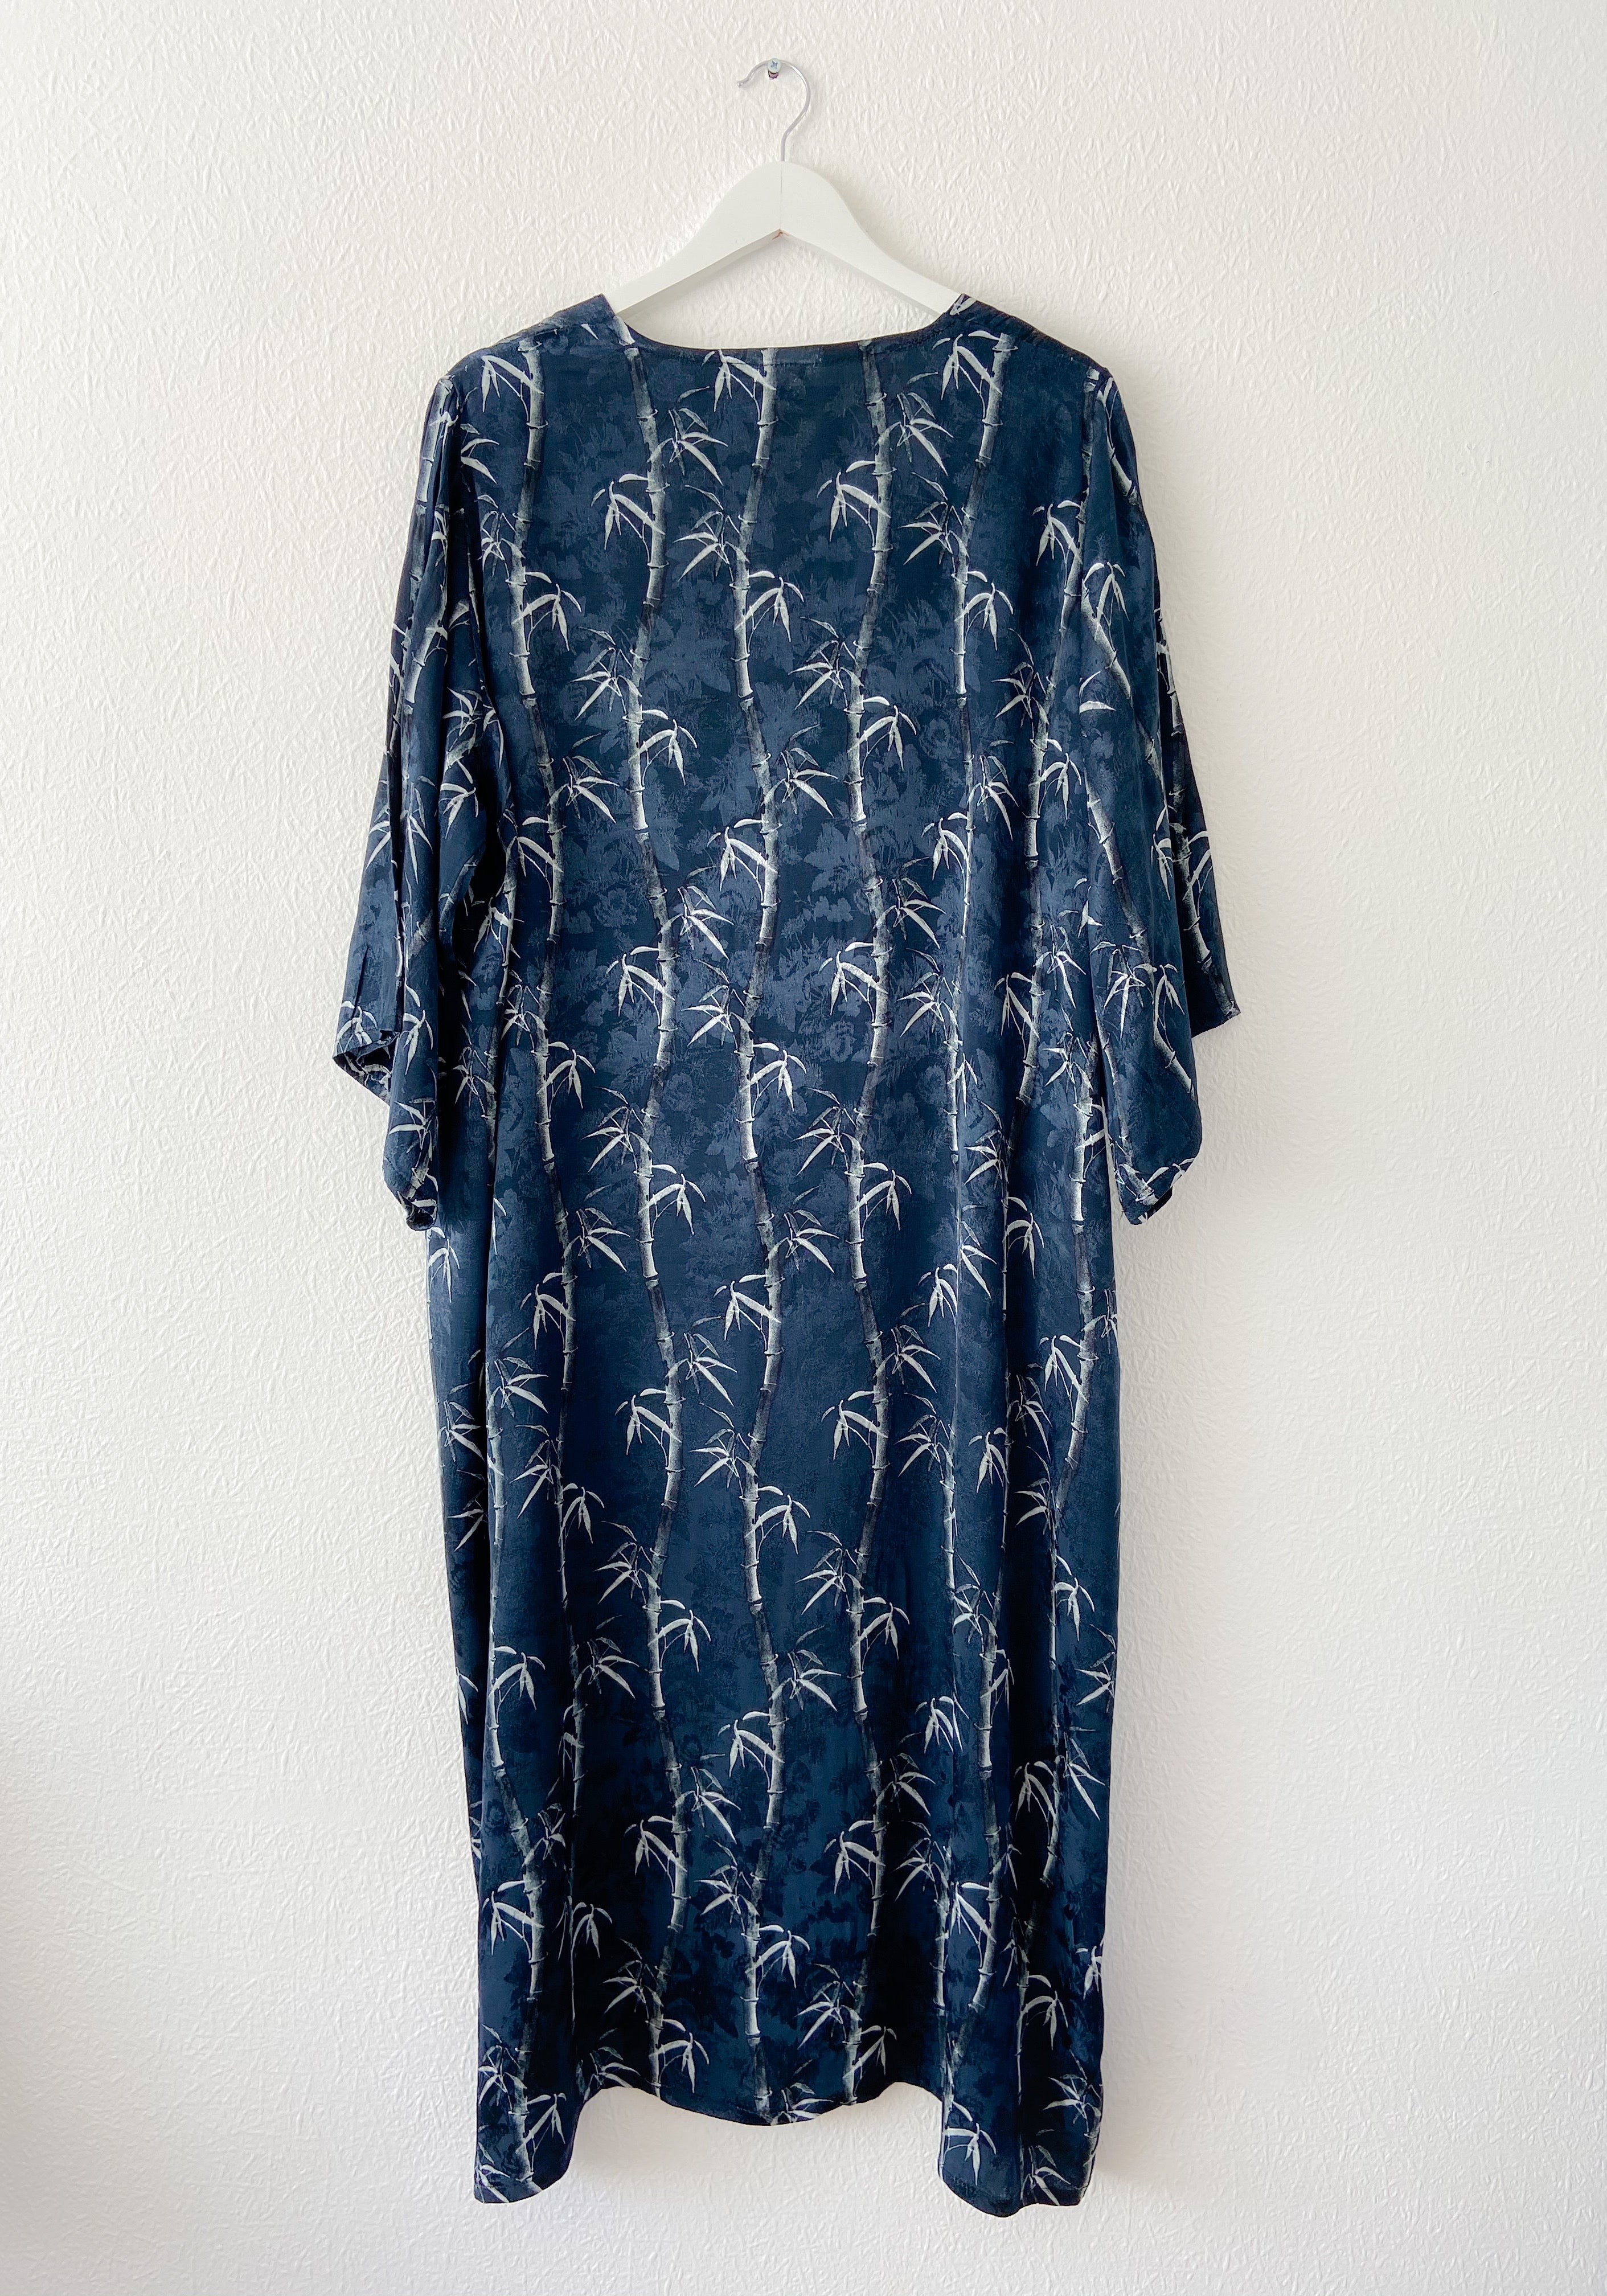 Bamboo Print Blue Kimono - Sample sale